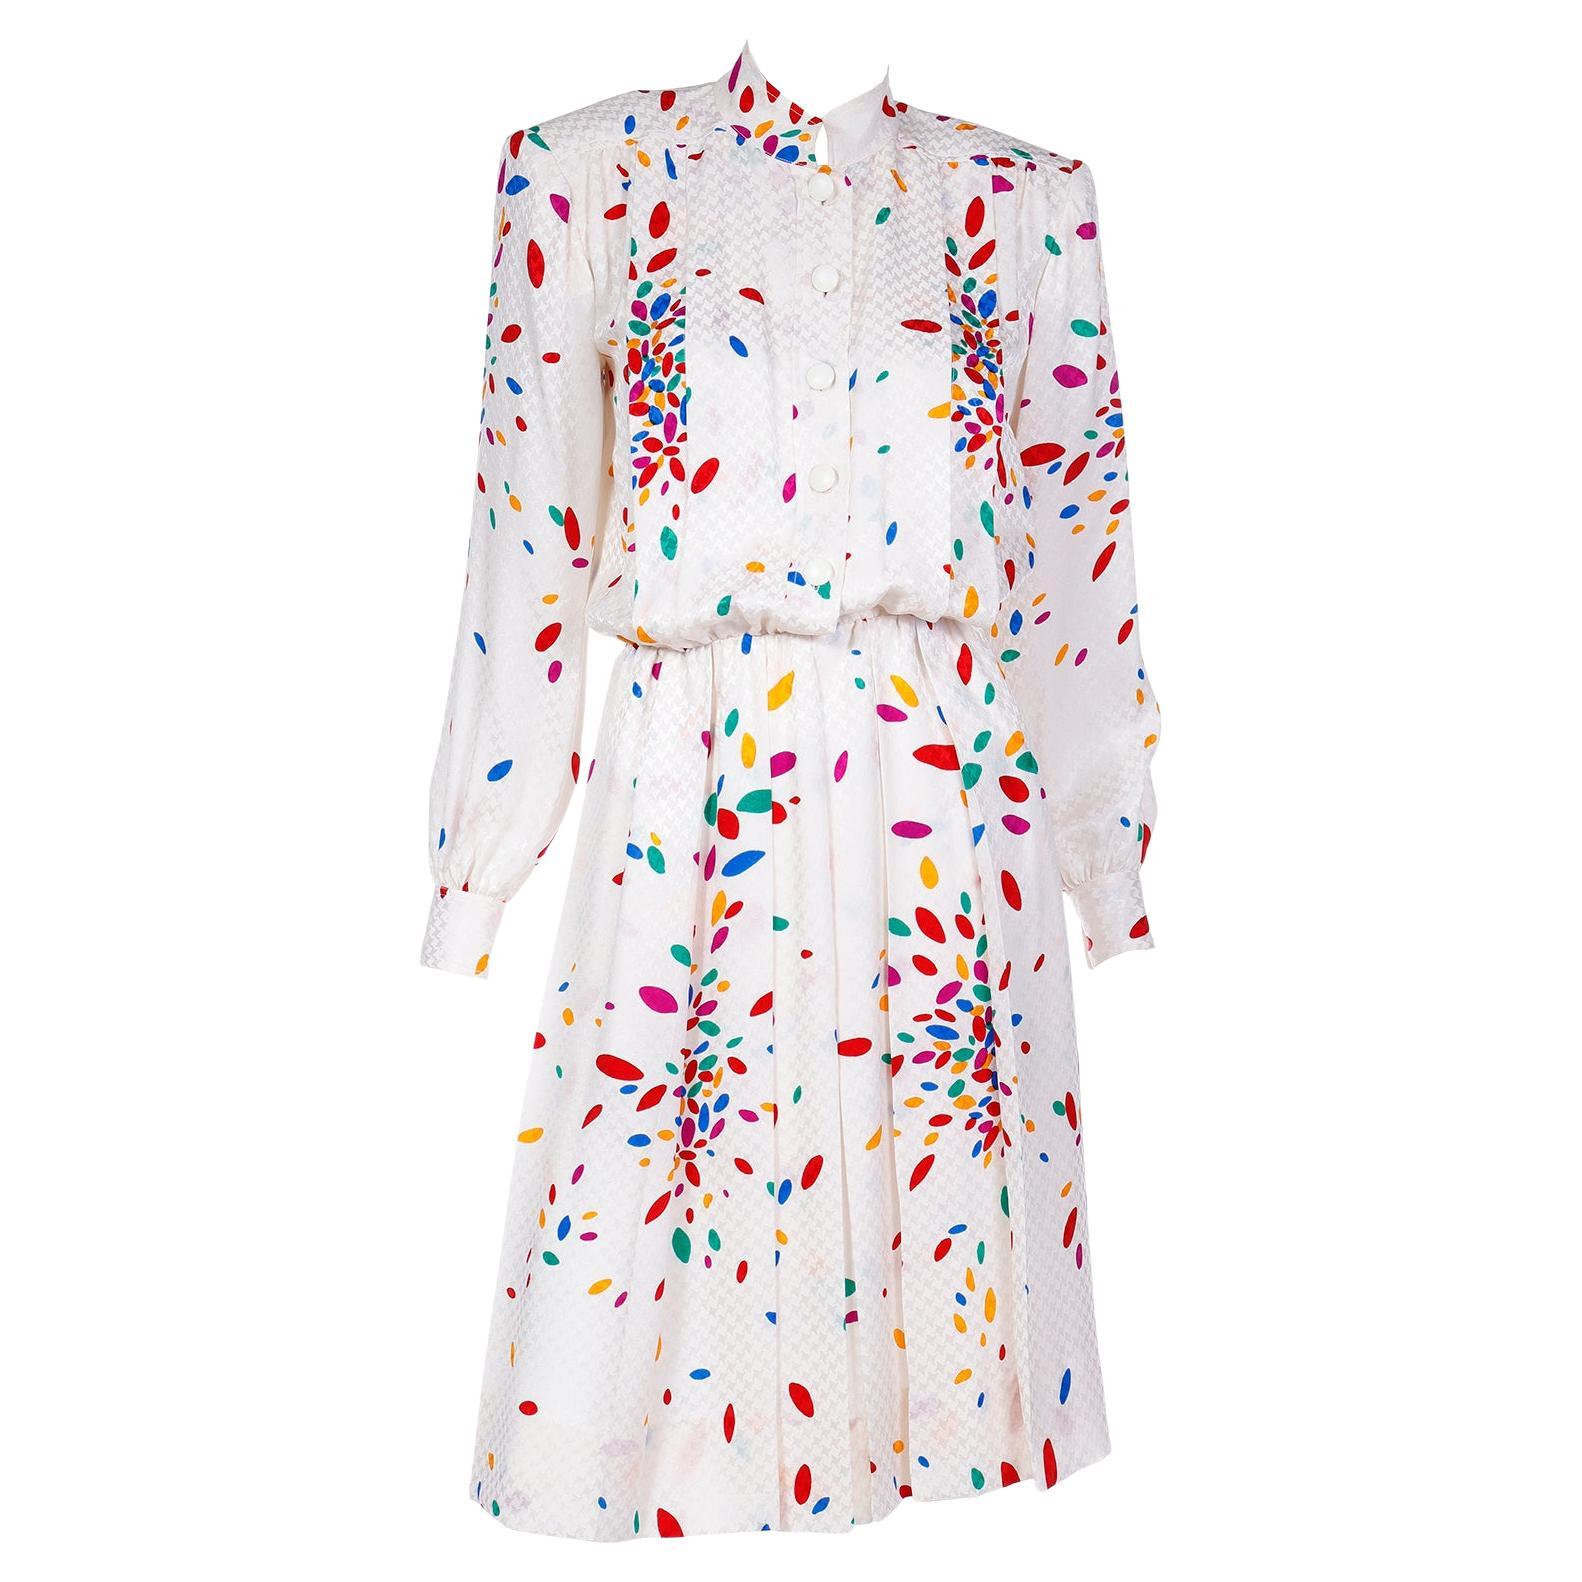 Yves Saint laurent Tonal White Print Silk Dress w Colorful Ovals & Polka Dots For Sale